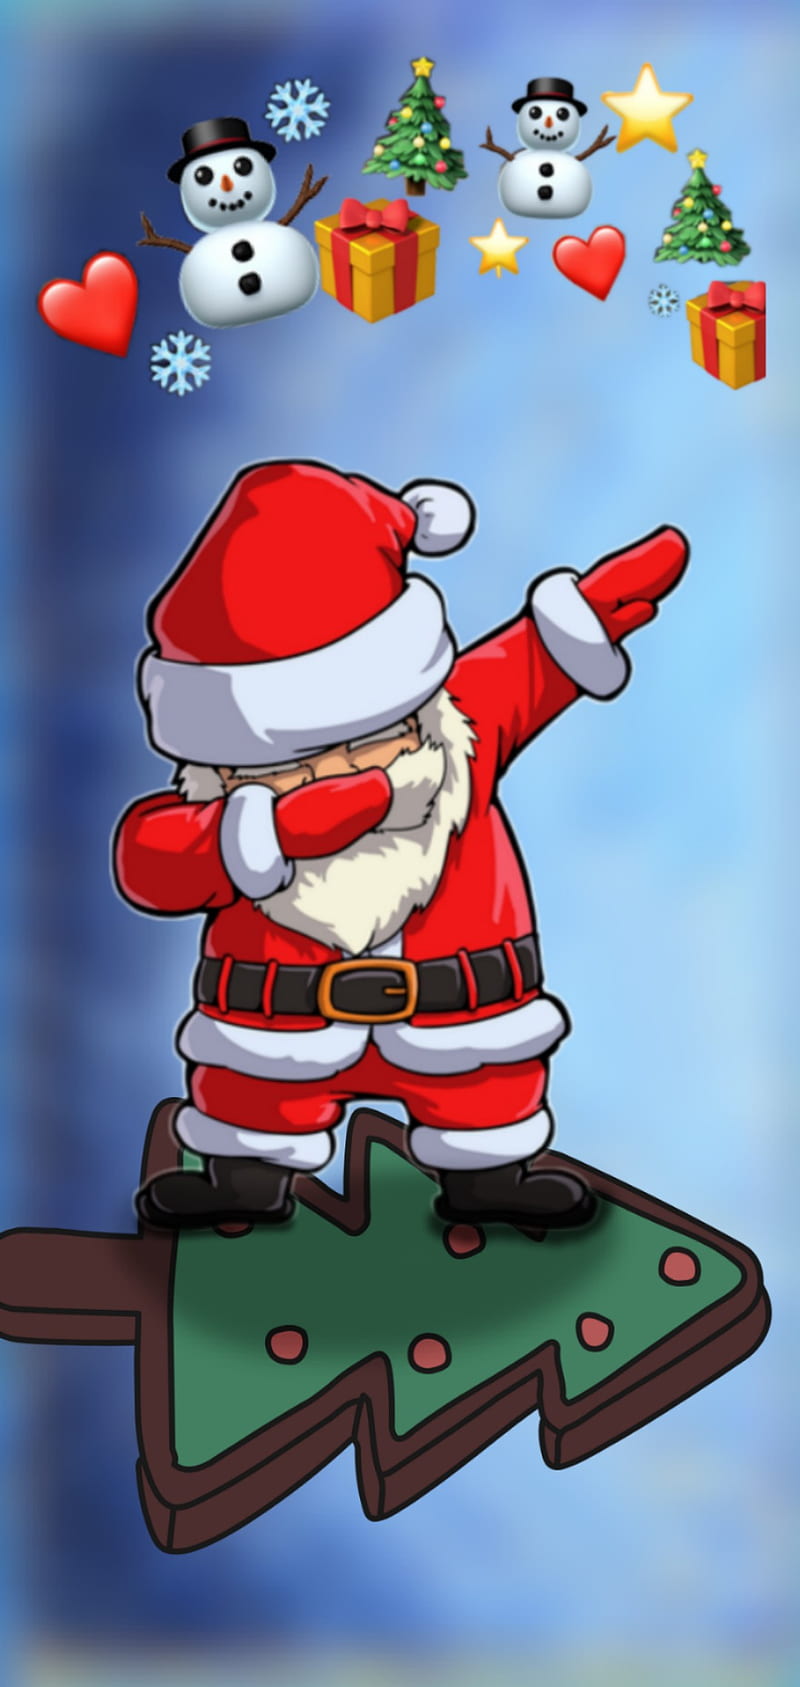 101336 Black Santa Claus Images Stock Photos  Vectors  Shutterstock